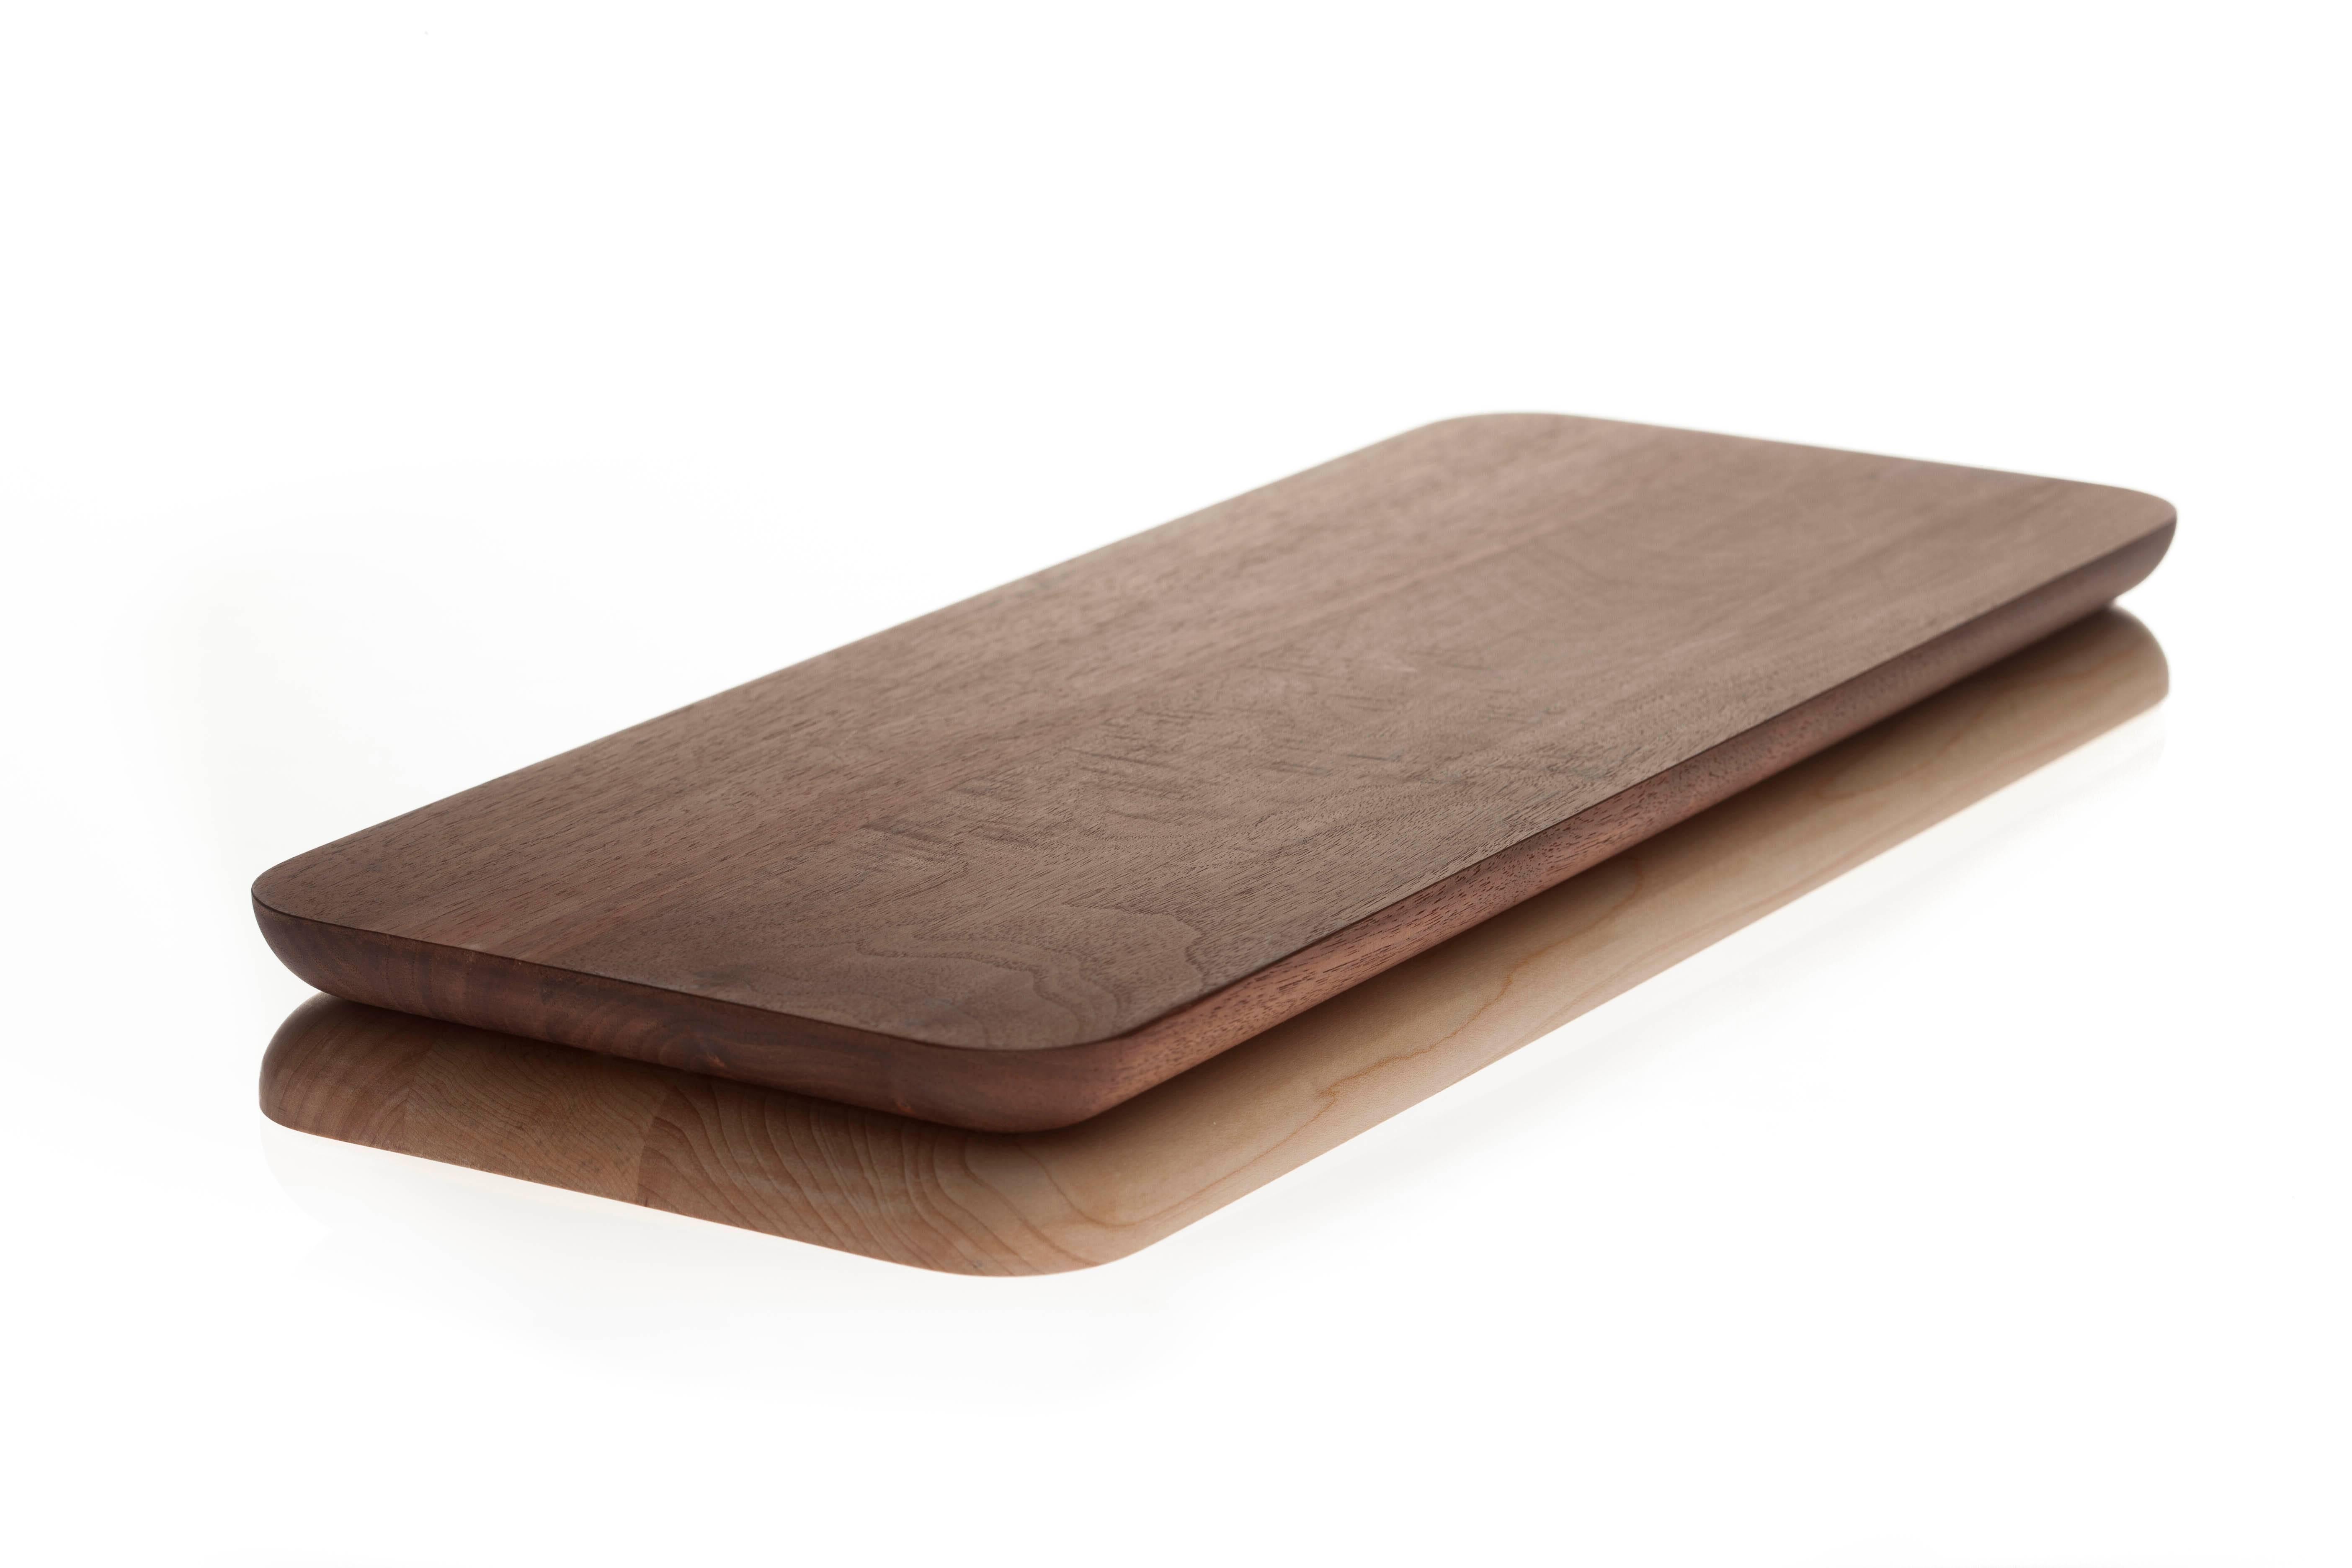 American fferrone Contemporary Rectangular Wood Serving Tray Chopping Serve Board